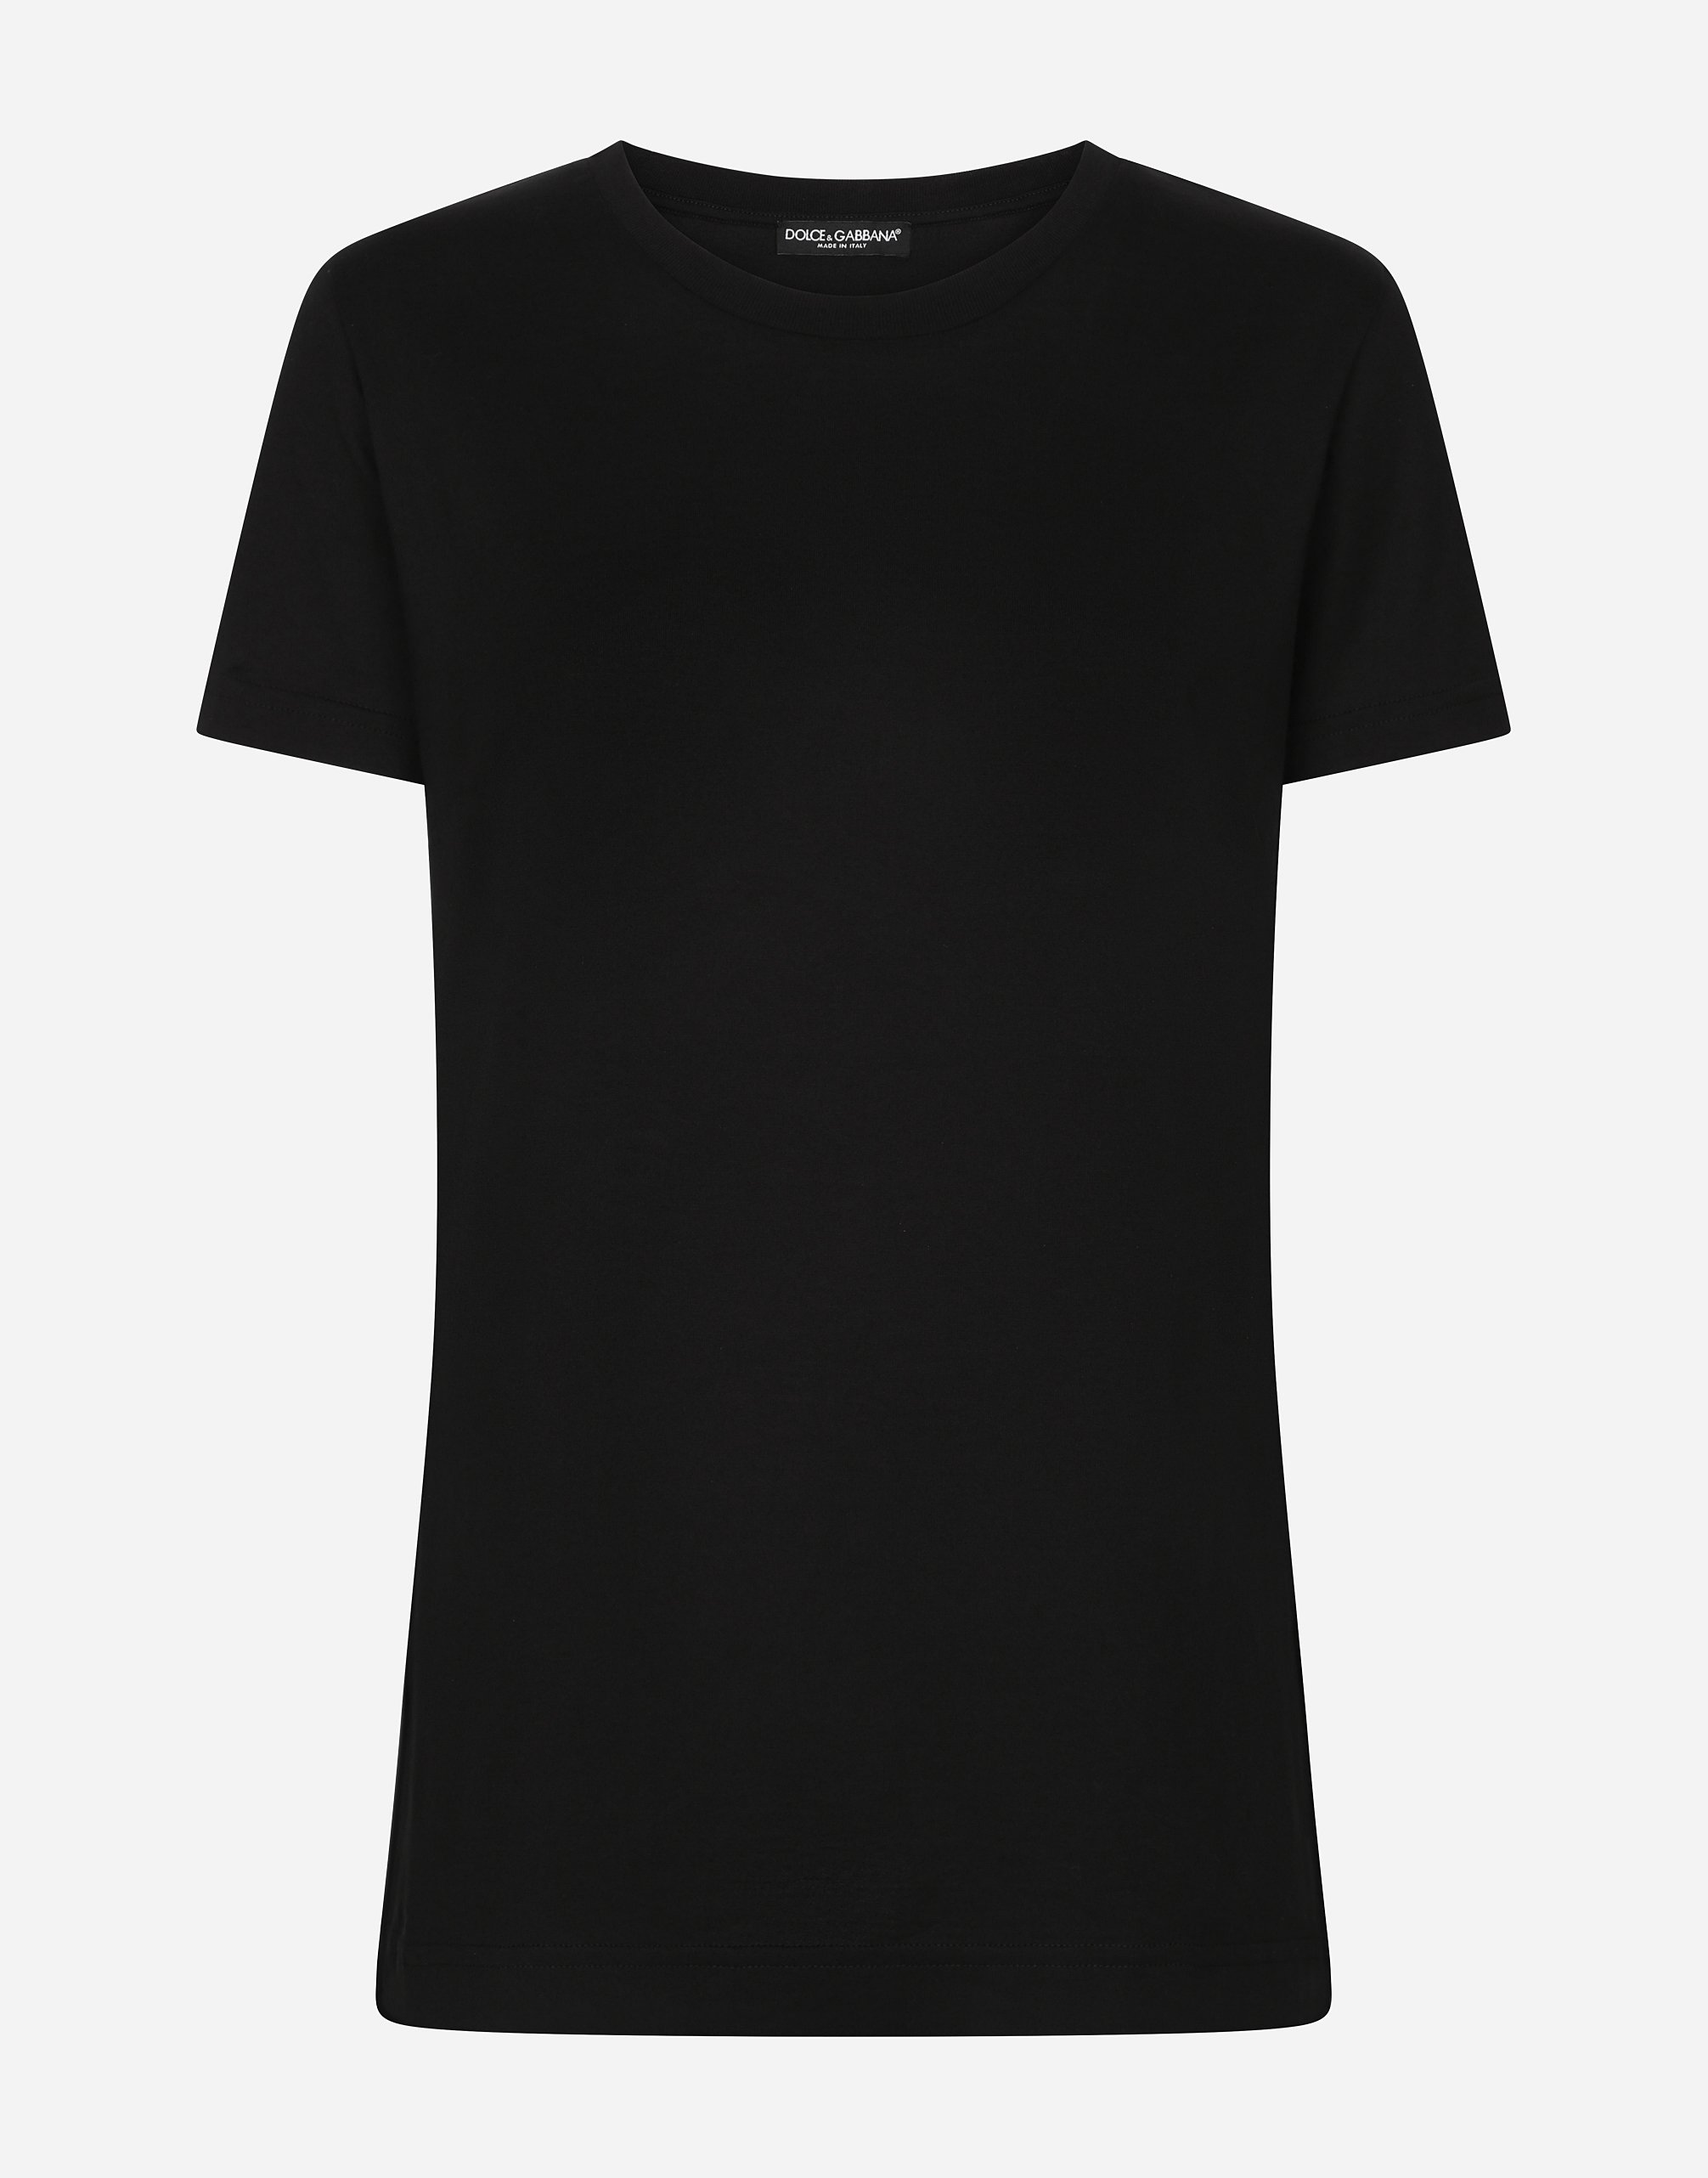 Short-sleeved jersey t-shirt in Black